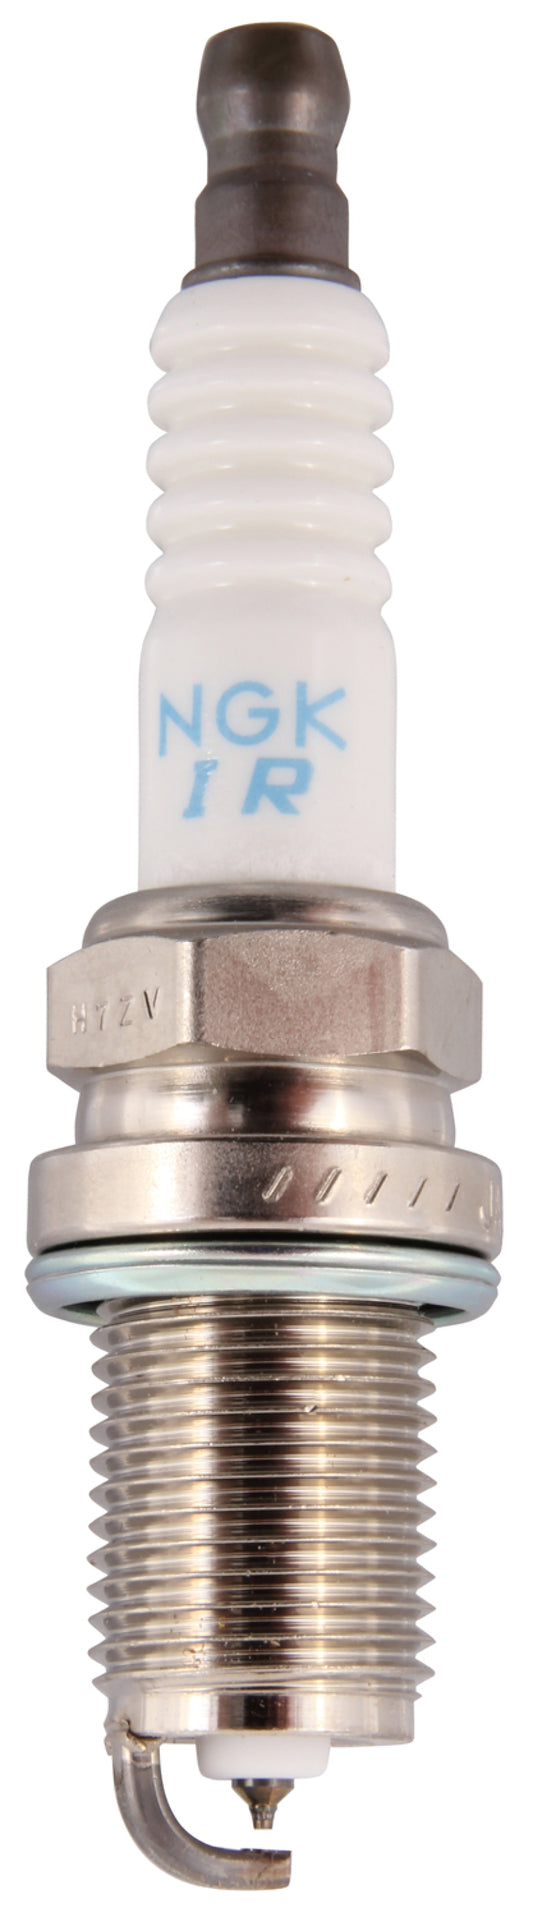 NGK Laser Iridium Spark Plug Box of 4 (IFR6F8DN)